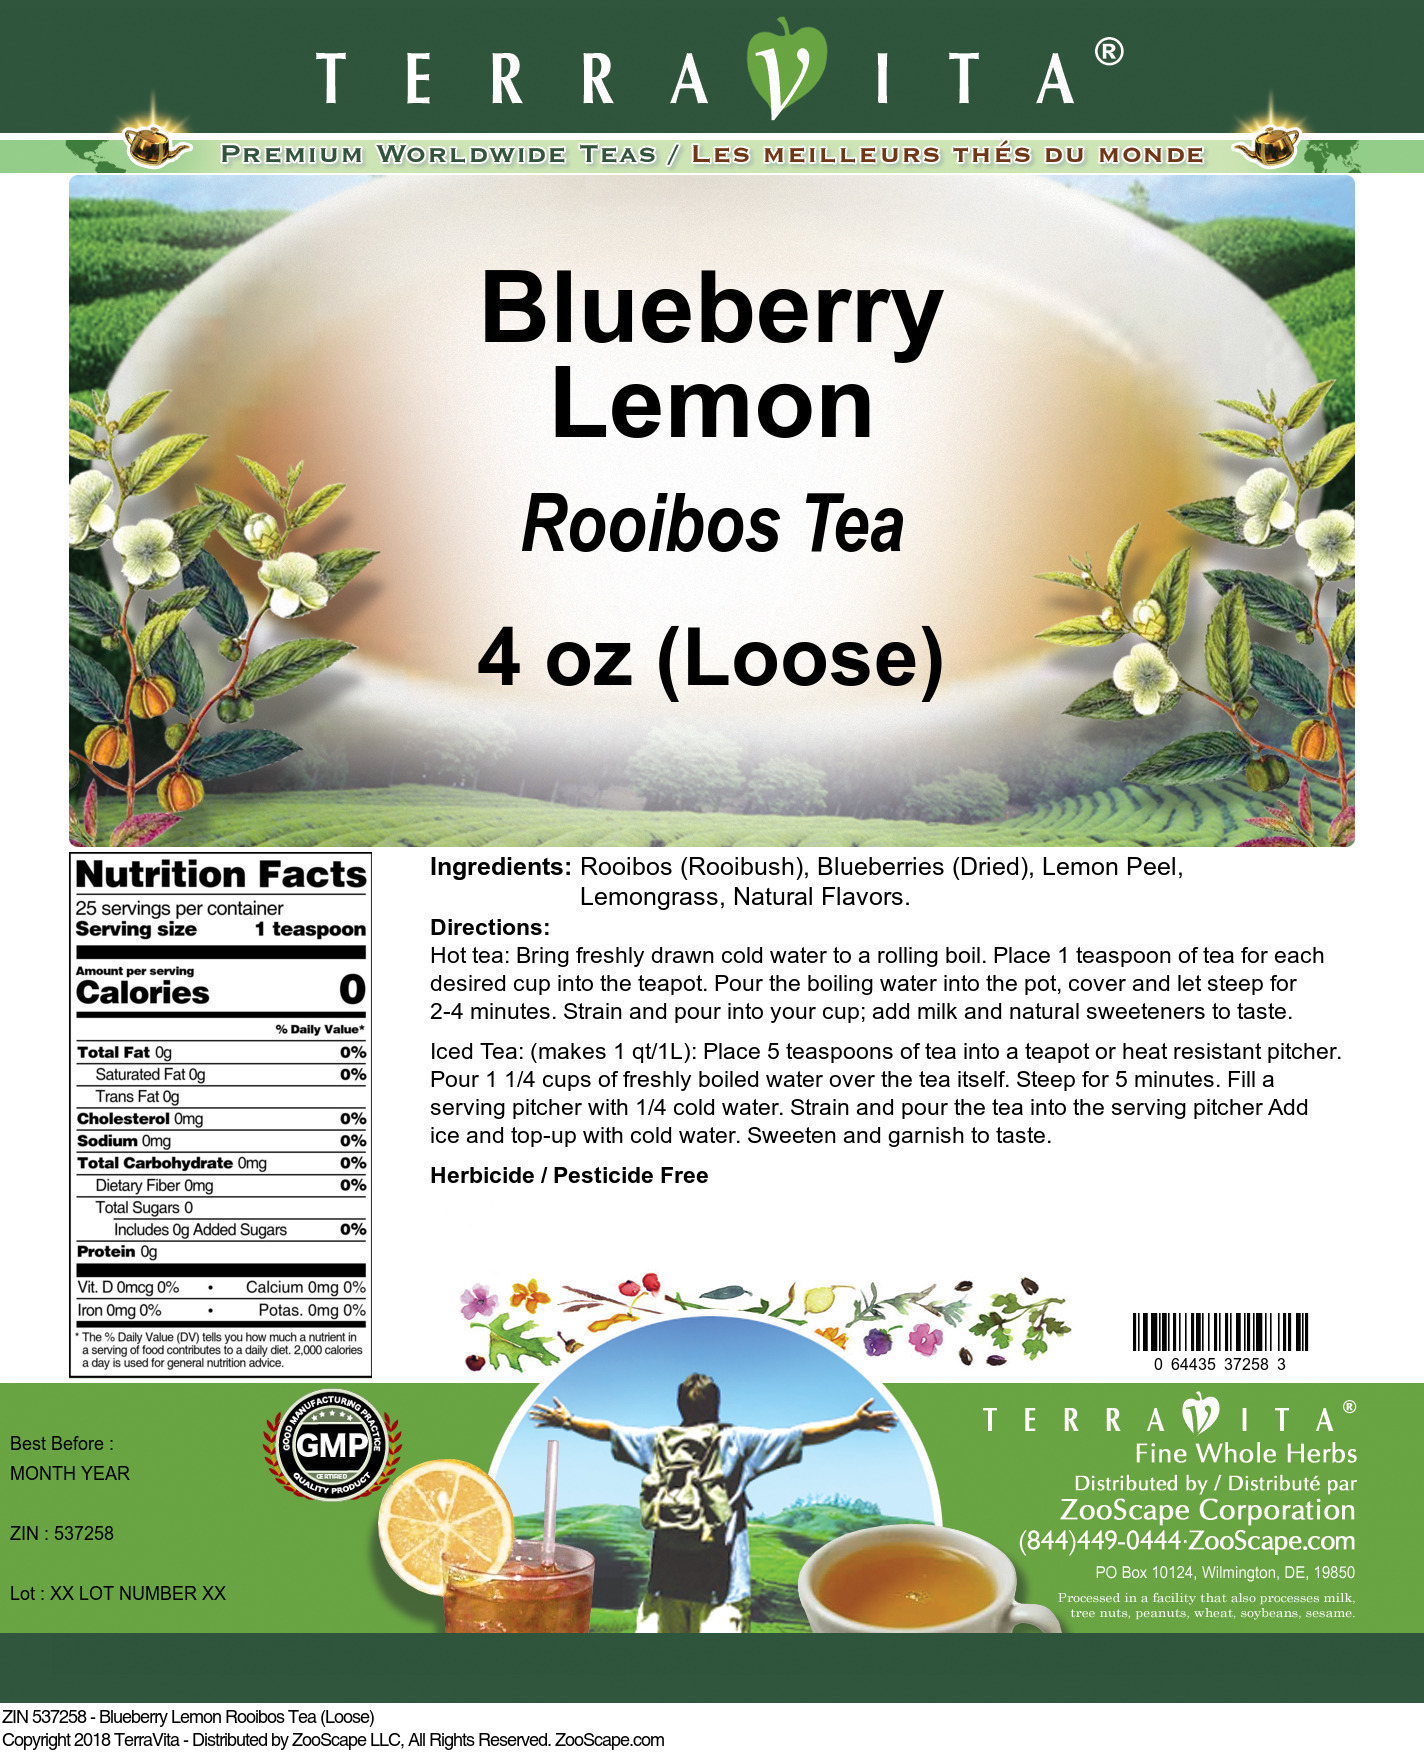 Blueberry Lemon Rooibos Tea (Loose) - Label